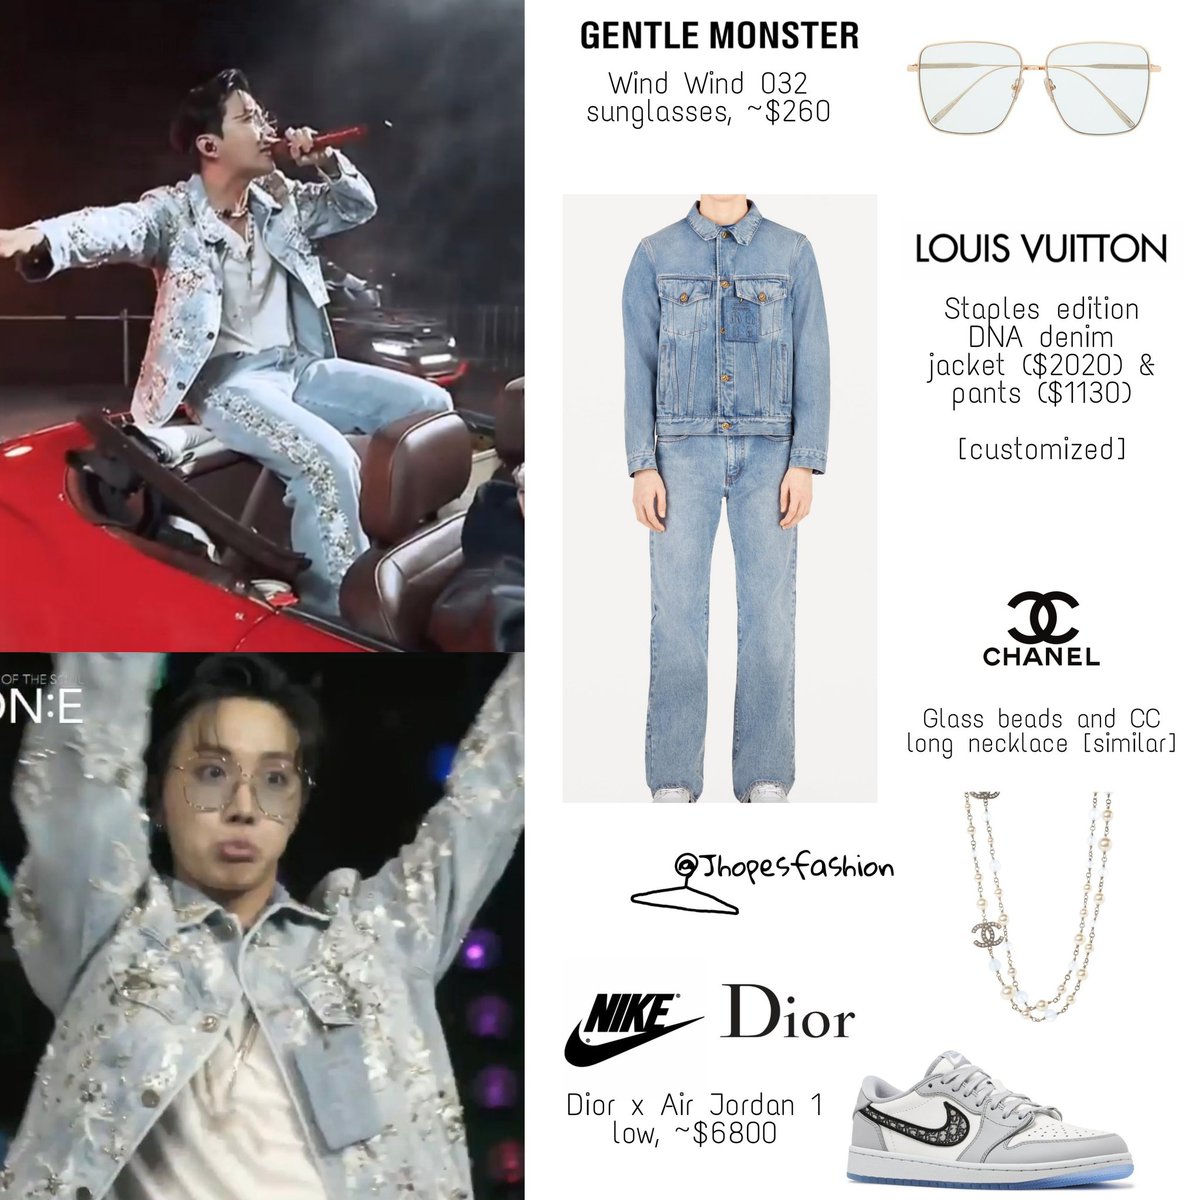 j-hope's closet (rest) on X: Hoseok's Louis Vuitton denim, Supreme shirt,  Balenciaga scarf, Nike x Dior sneakers, Gentle Monster glasses 201010 -  MOTS ON:E Ego and Ugh #jhope #제이홉 #Jhopefashion  /